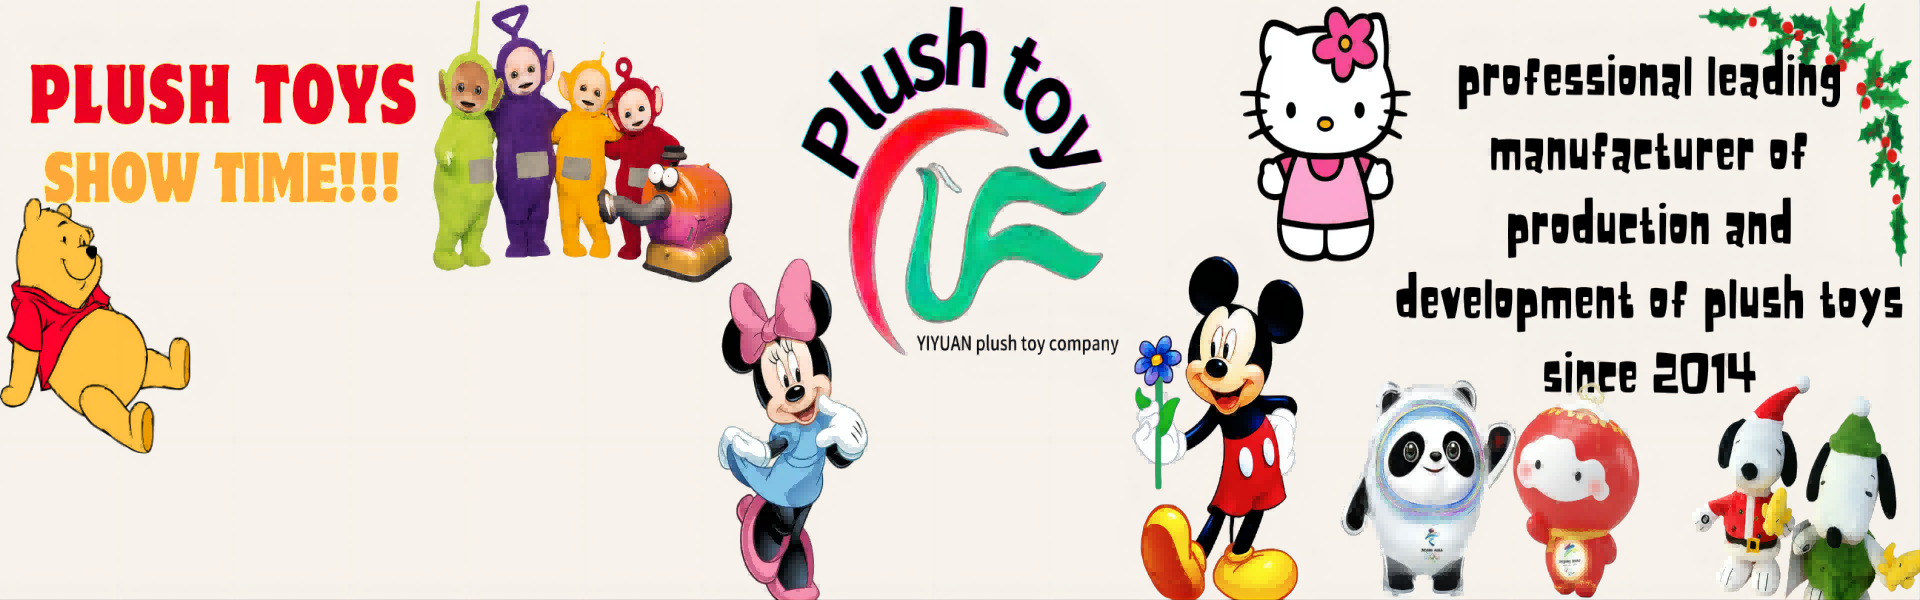 plush toy,high-quality,professional r&d teams,yiyuan plush toy company